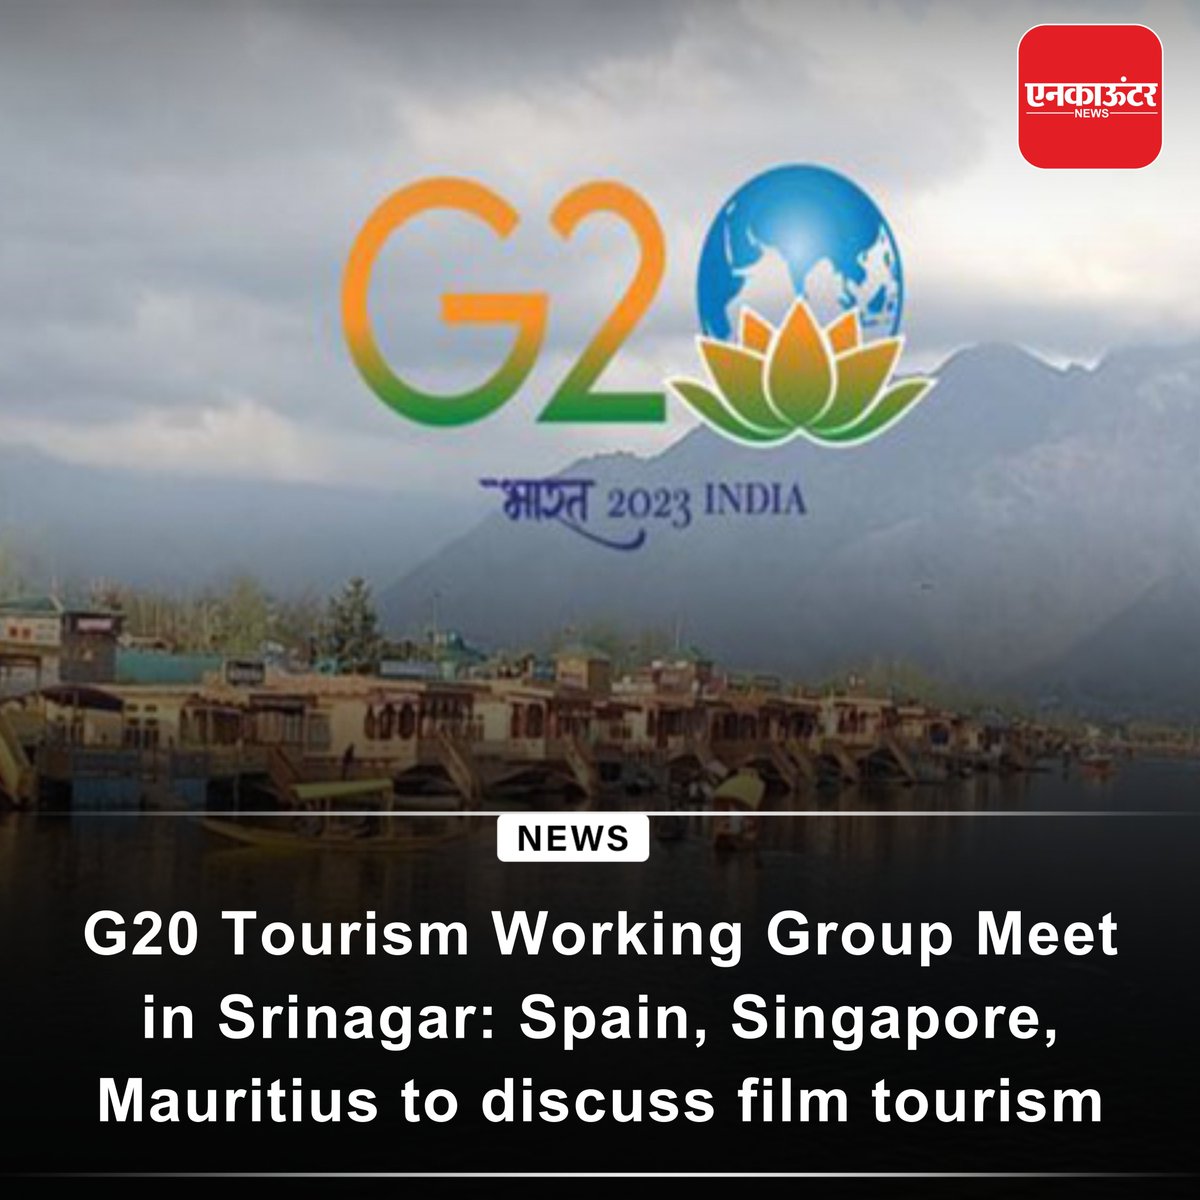 G20 बैठक में इस विषय पर होगी विशेष चर्चा, देखें पोस्ट
.
.
.
.
#G20 #tourism #workinggroup #meet #srinagar #spain #singapore #mauritius #discuss #film #tourism #news #newsupdate #latestnewes #latestnewsupdate #twitter #encounternews